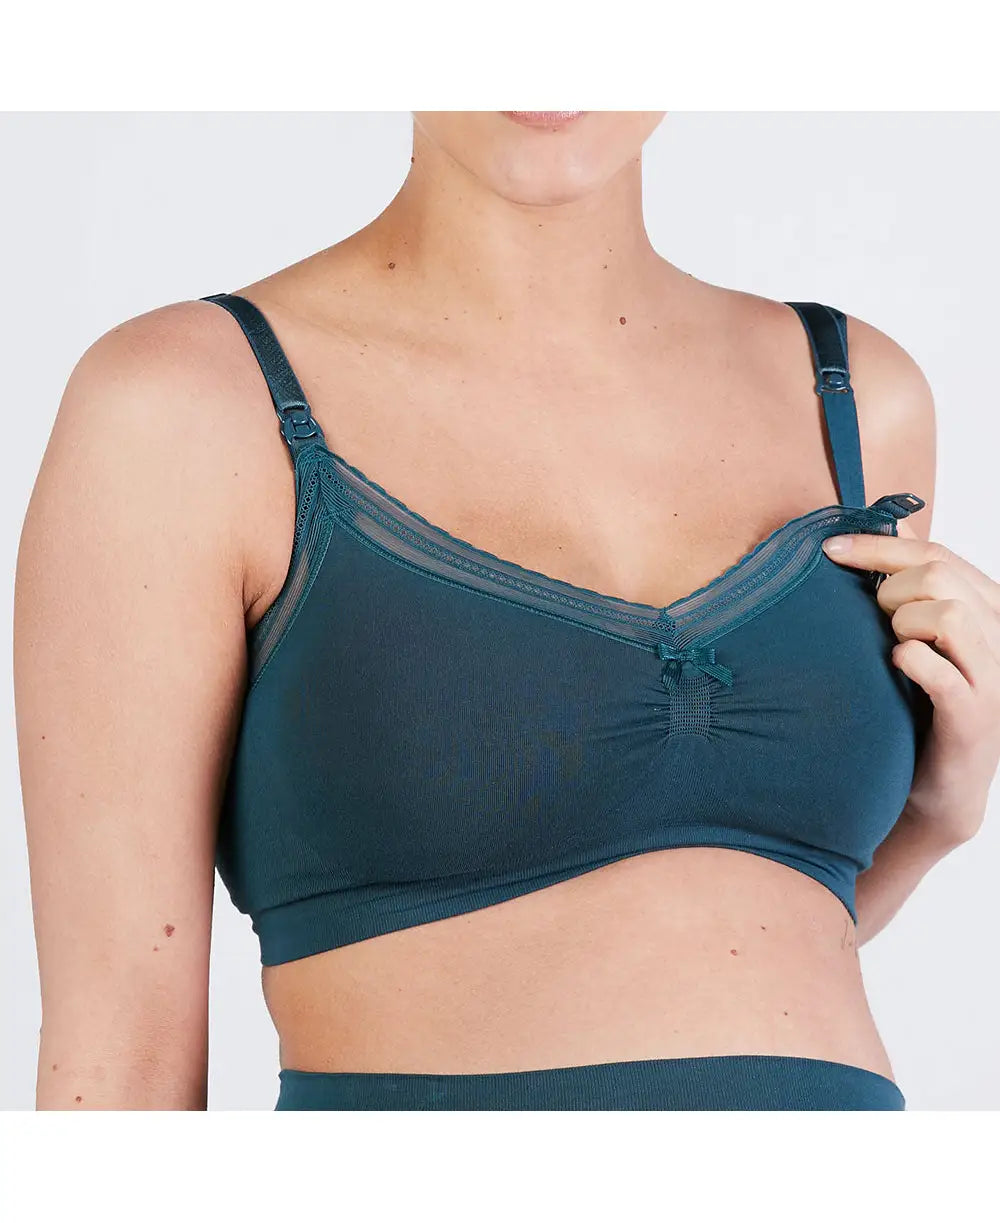 NipCo - The OG Bra - A supportive and second skin maternity bra – NipCo.